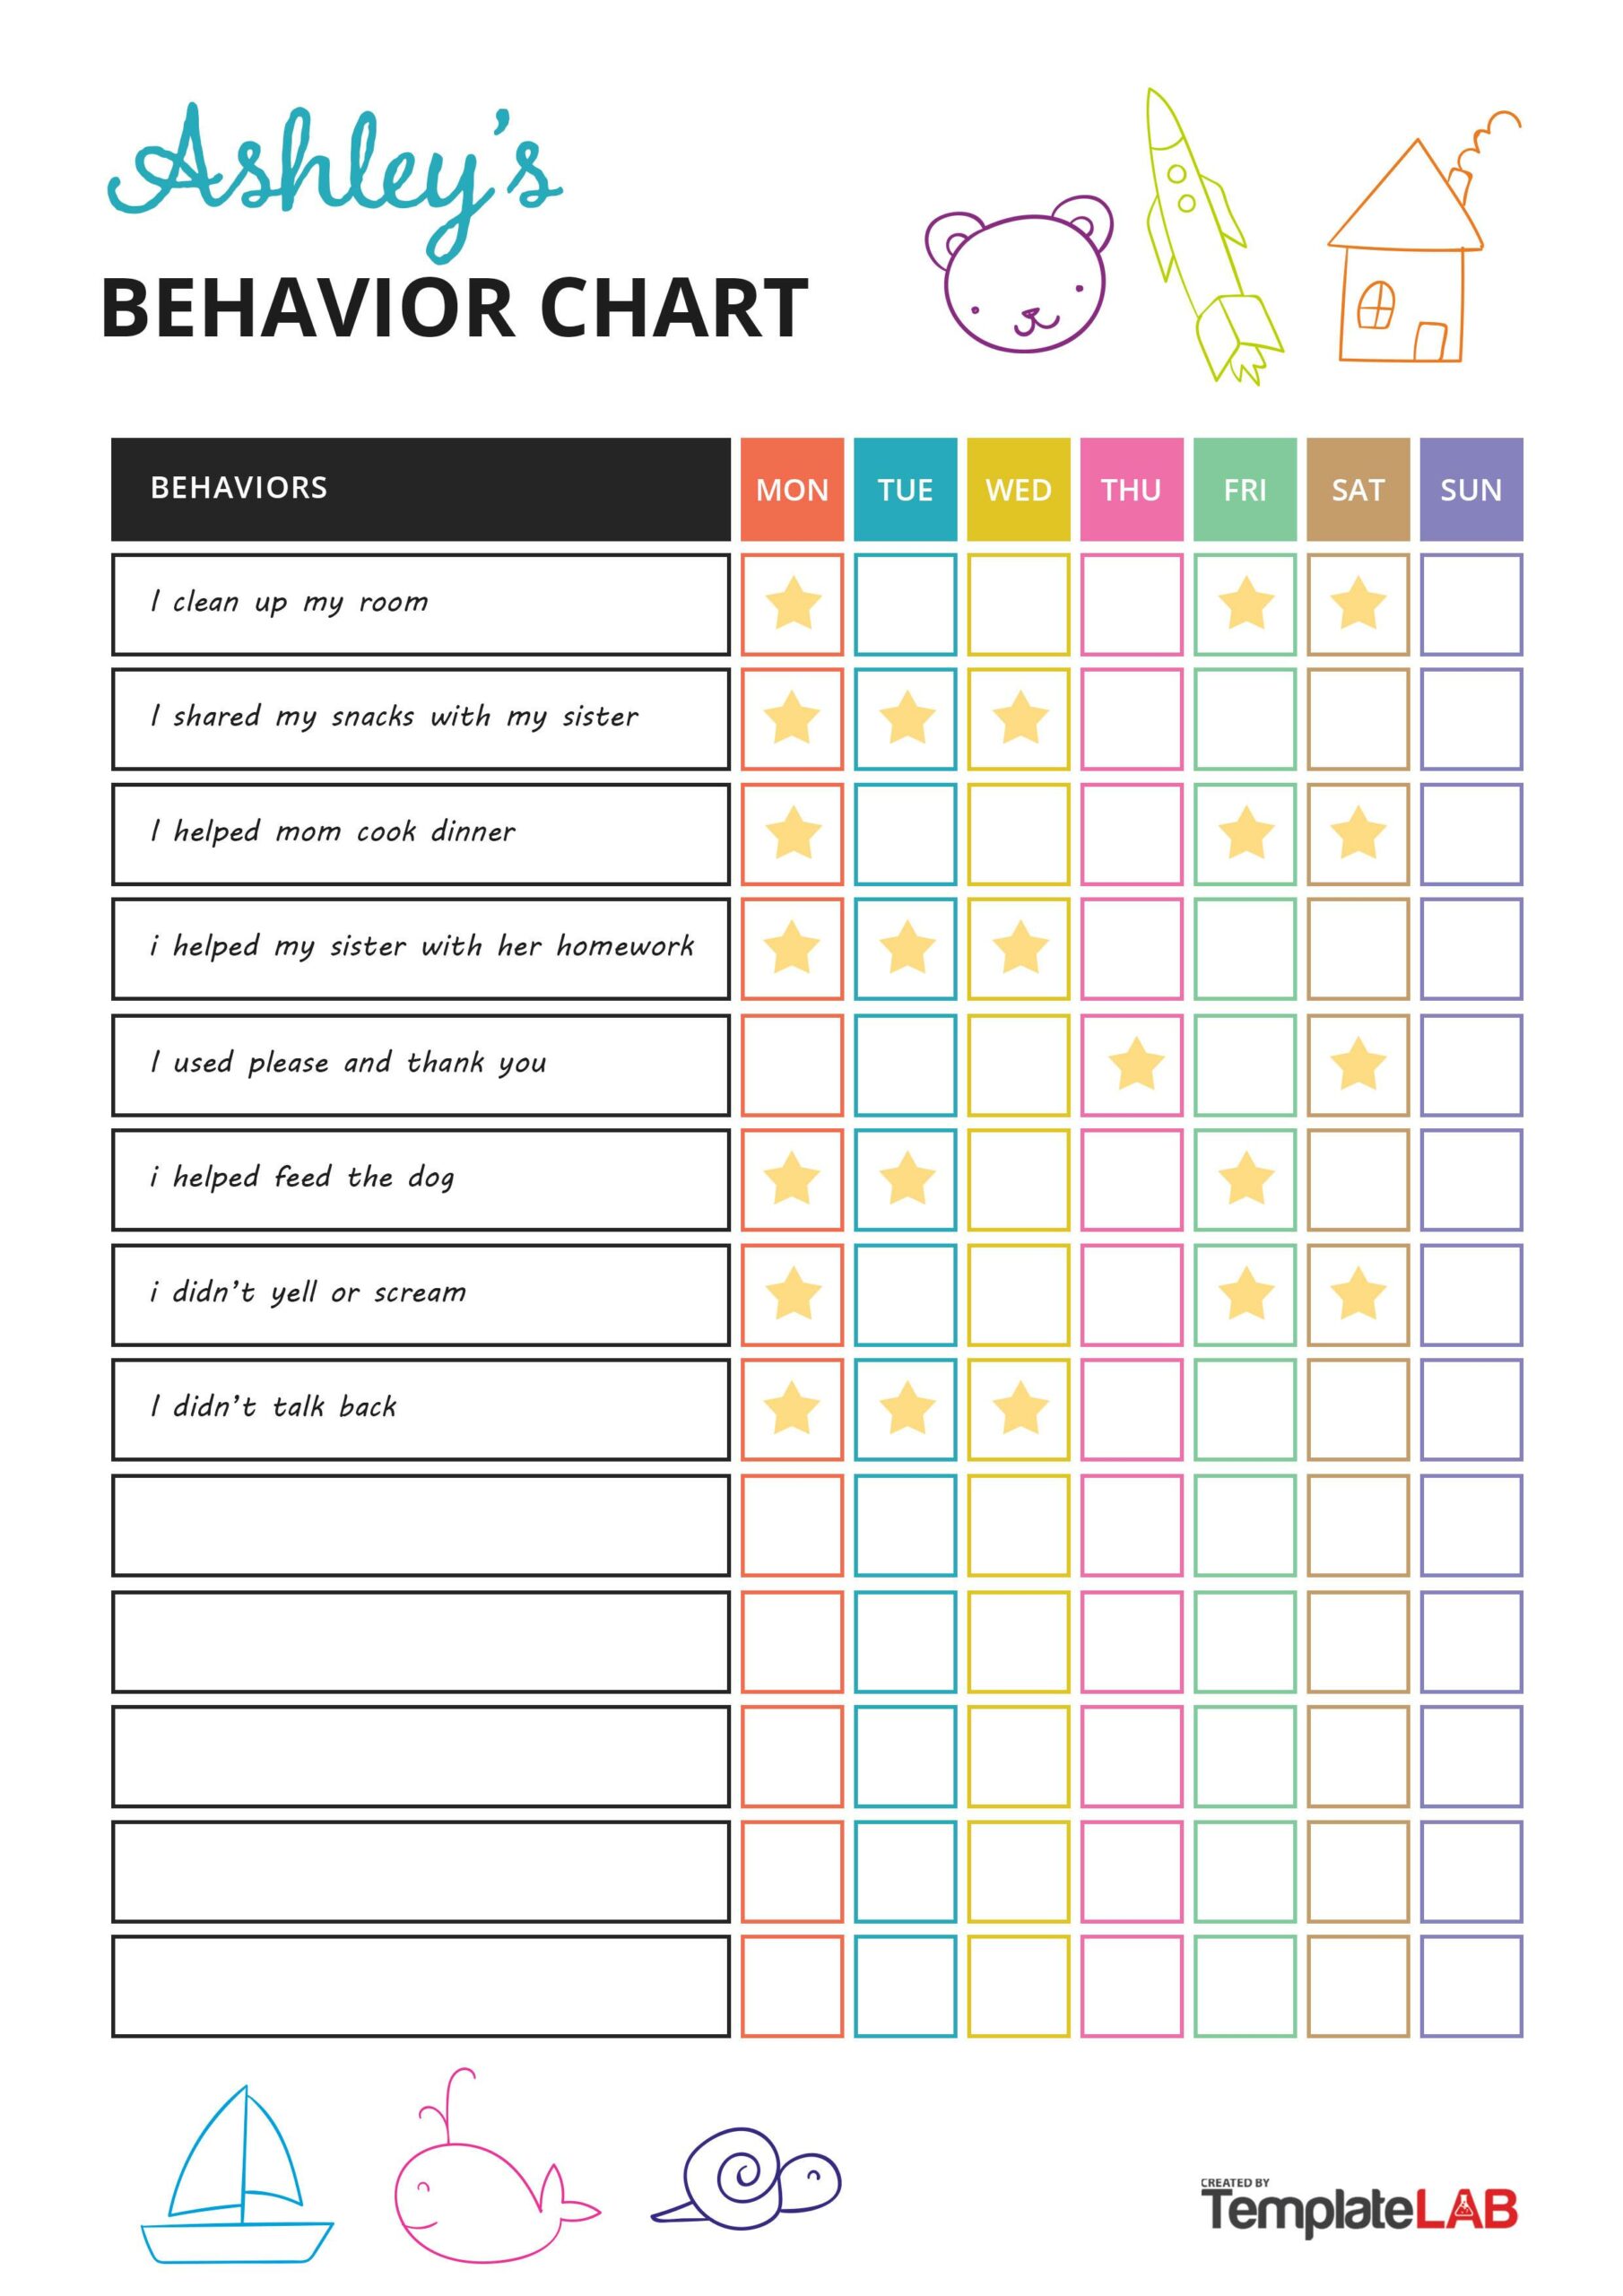 19 Printable Behavior Chart Templates [for Kids] ᐅ TemplateLab